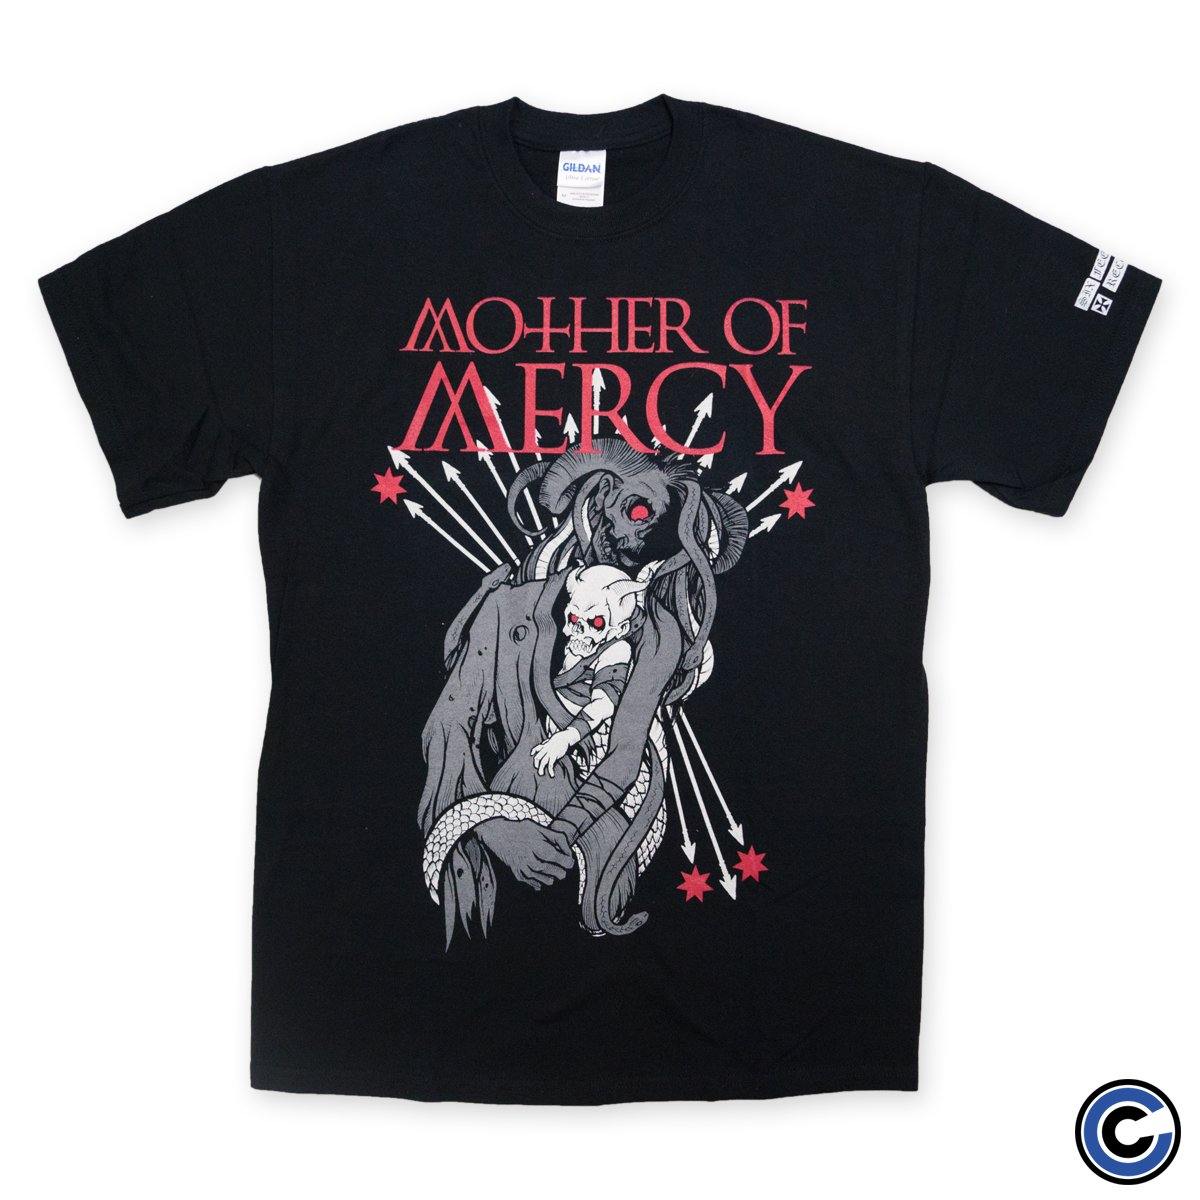 Buy – Mother of Mercy "Serpent" Shirt – Band & Music Merch – Cold Cuts Merch